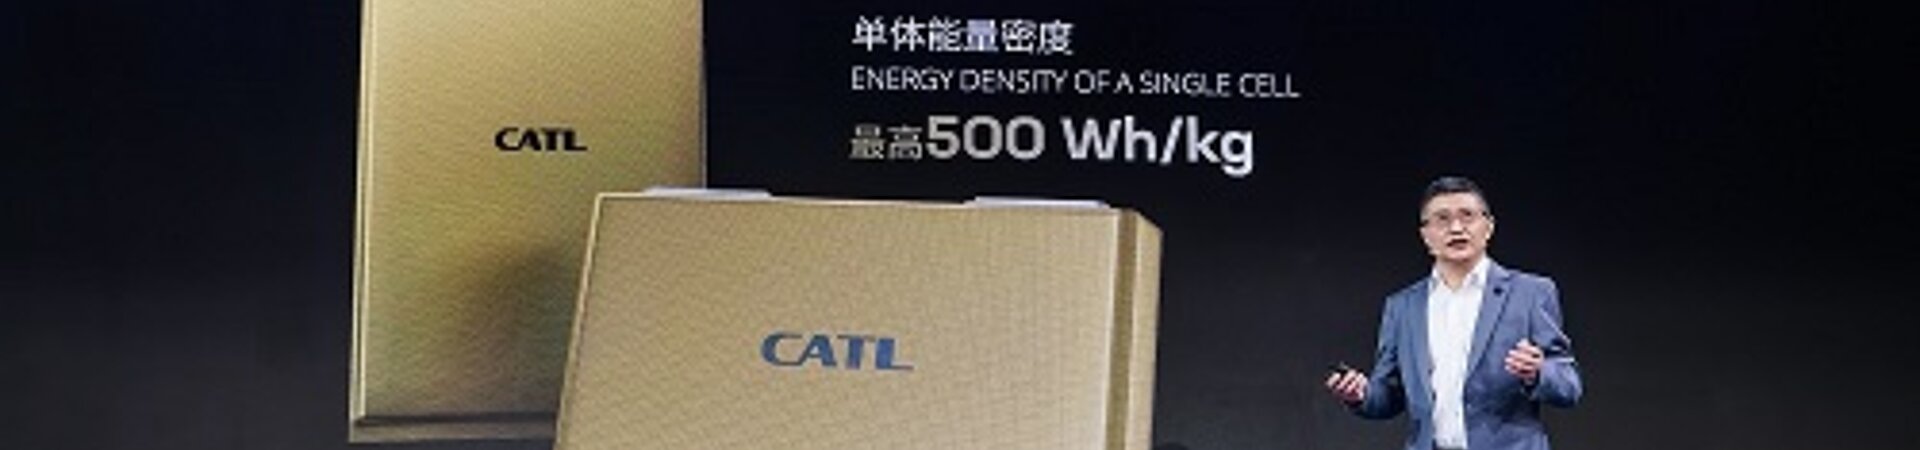 CATL "Condensed Battery"